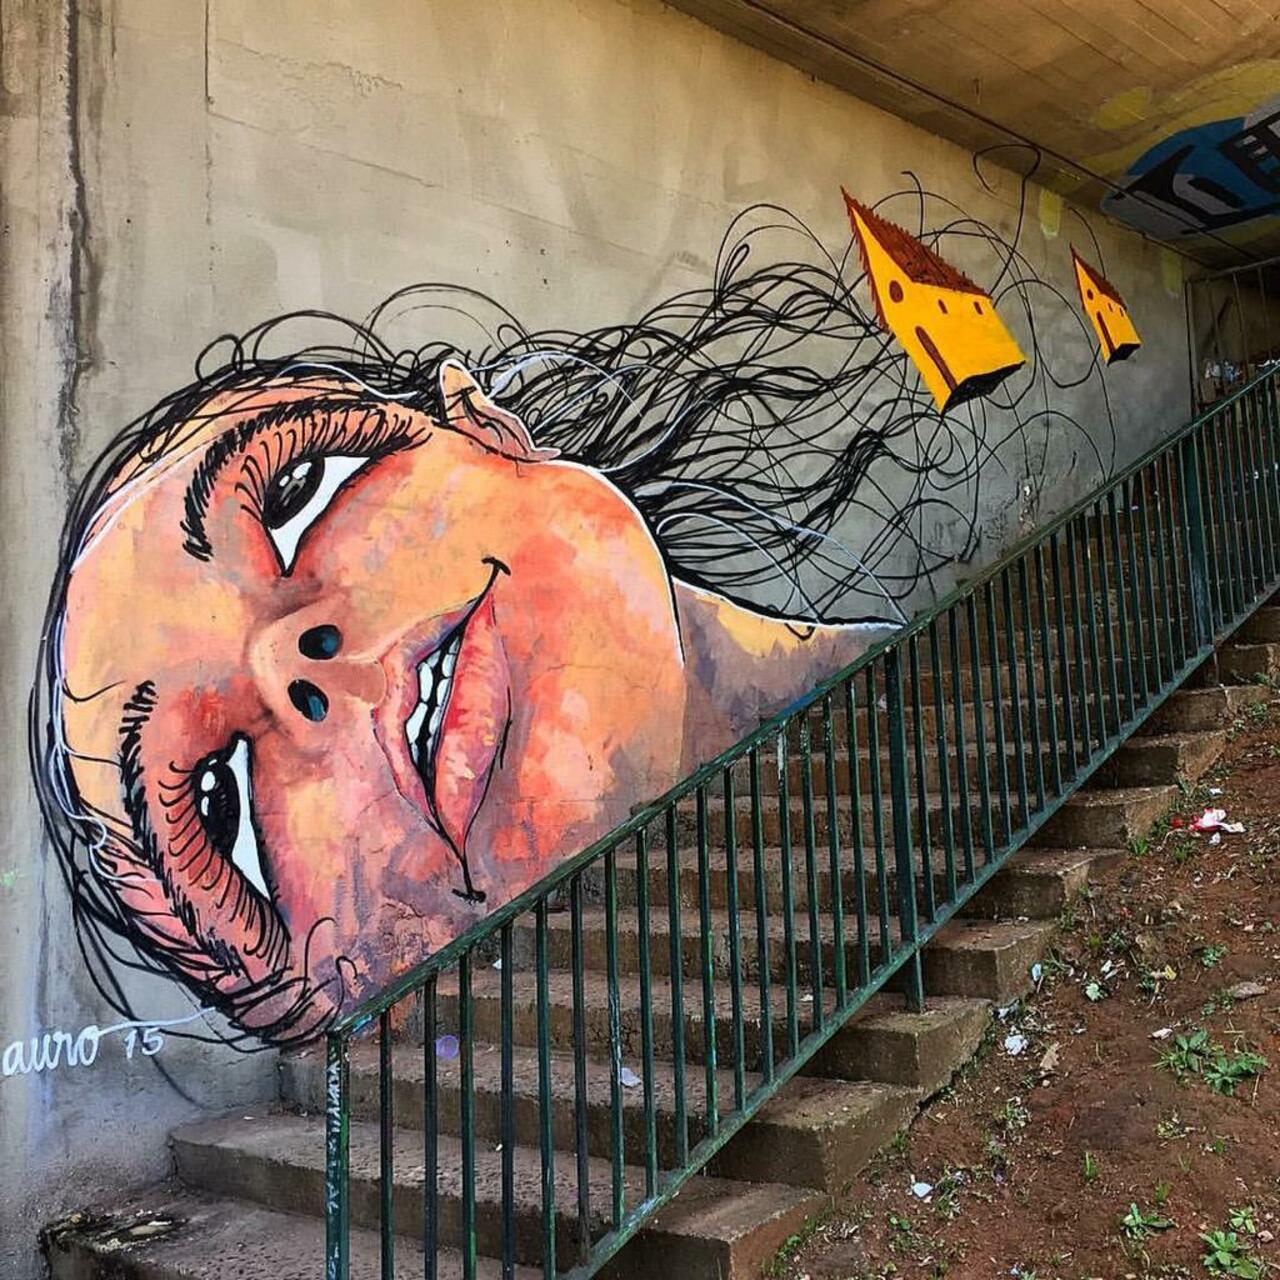 Street Art by Reveracidade in São Paulo 

#art #graffiti #mural #streetart http://t.co/CUKQoRngyT